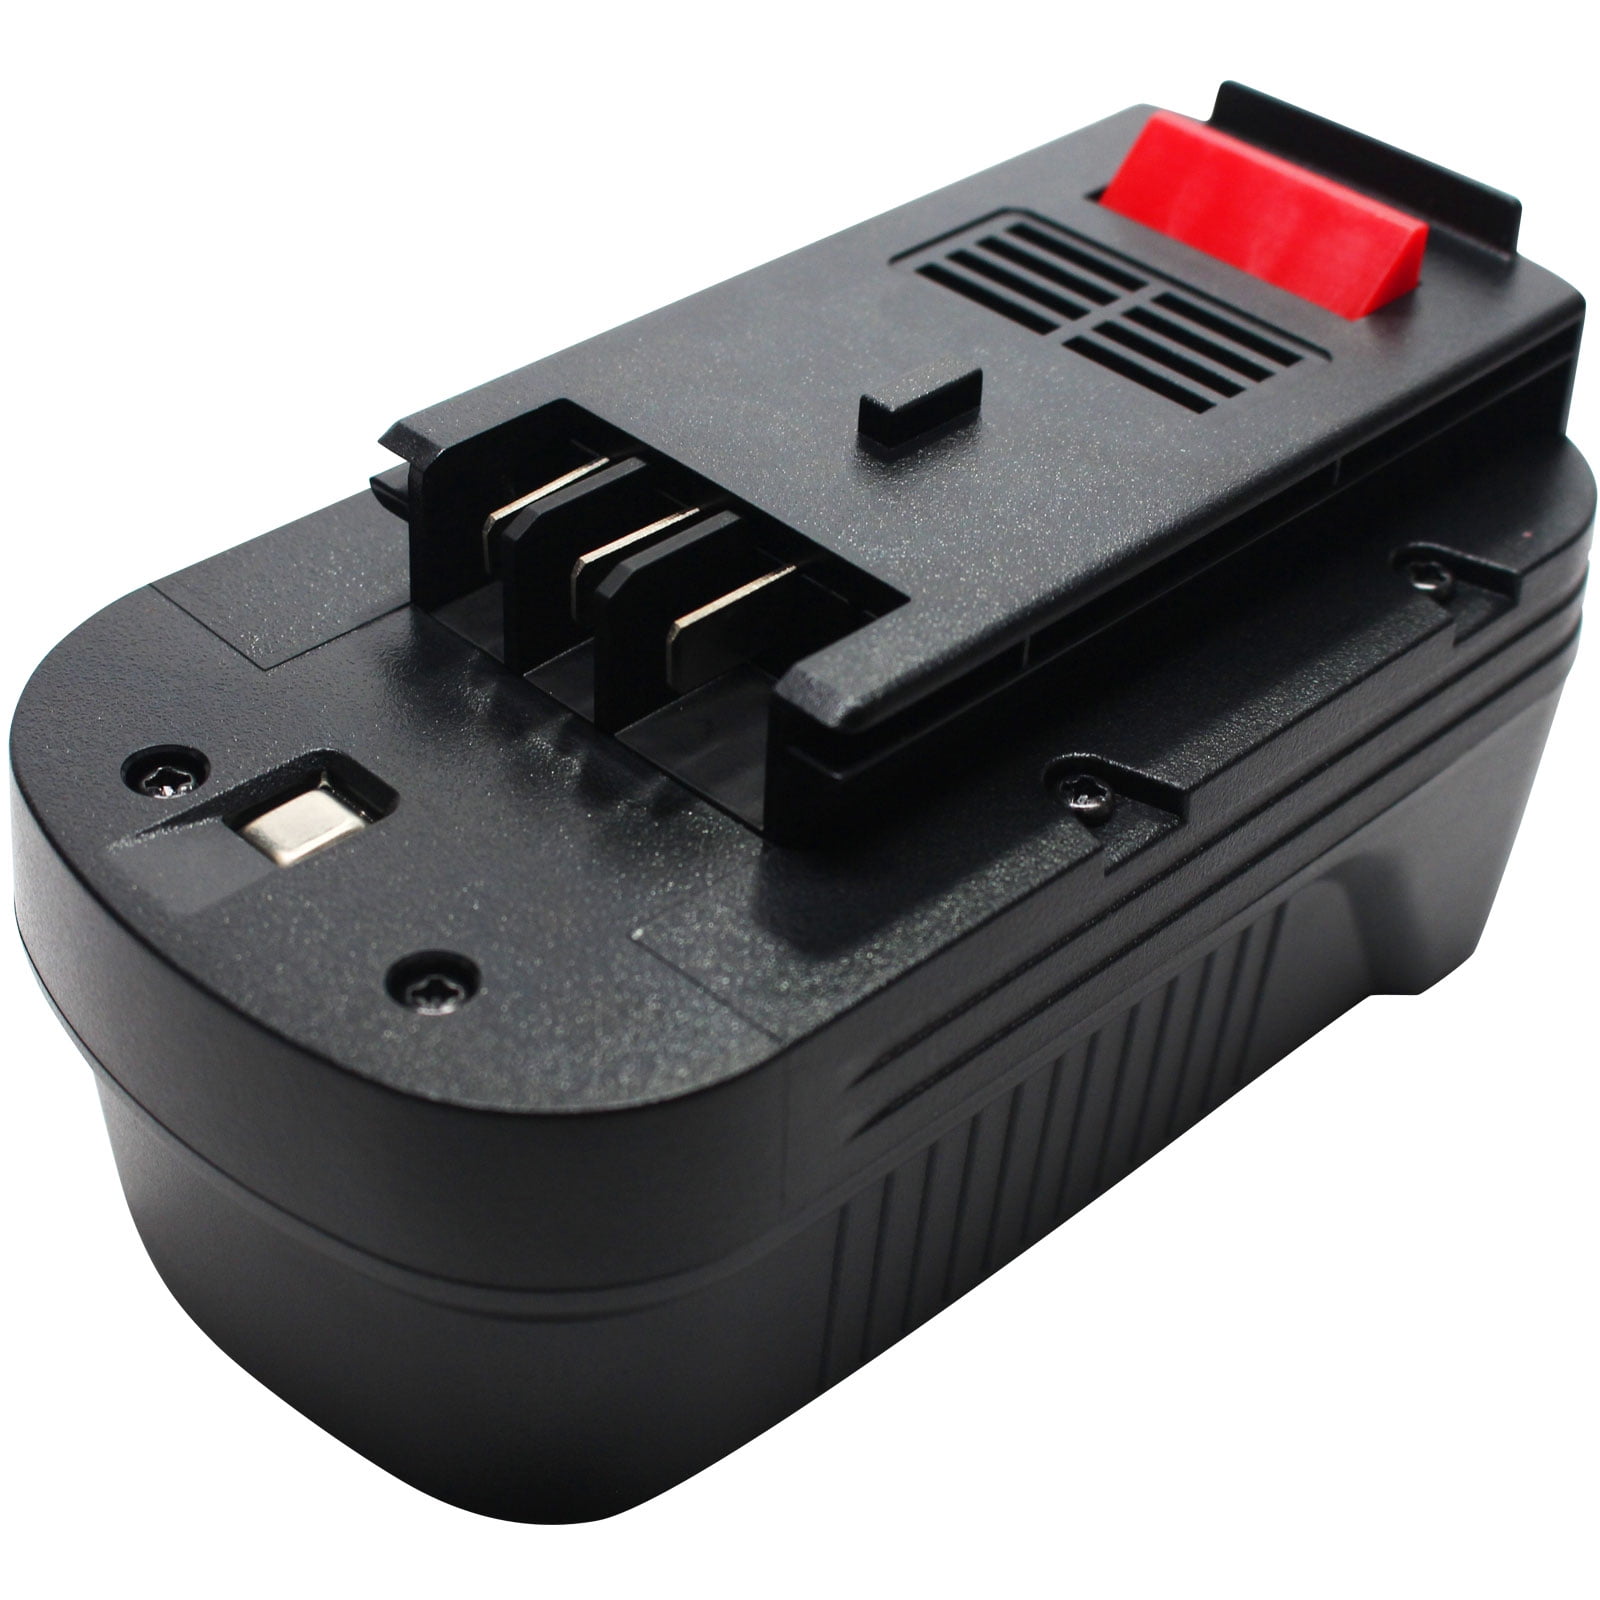 Black and Decker 2 Pack LCS20 20 Volt Li-on Battery Charging Adaptor 90553168-2PK